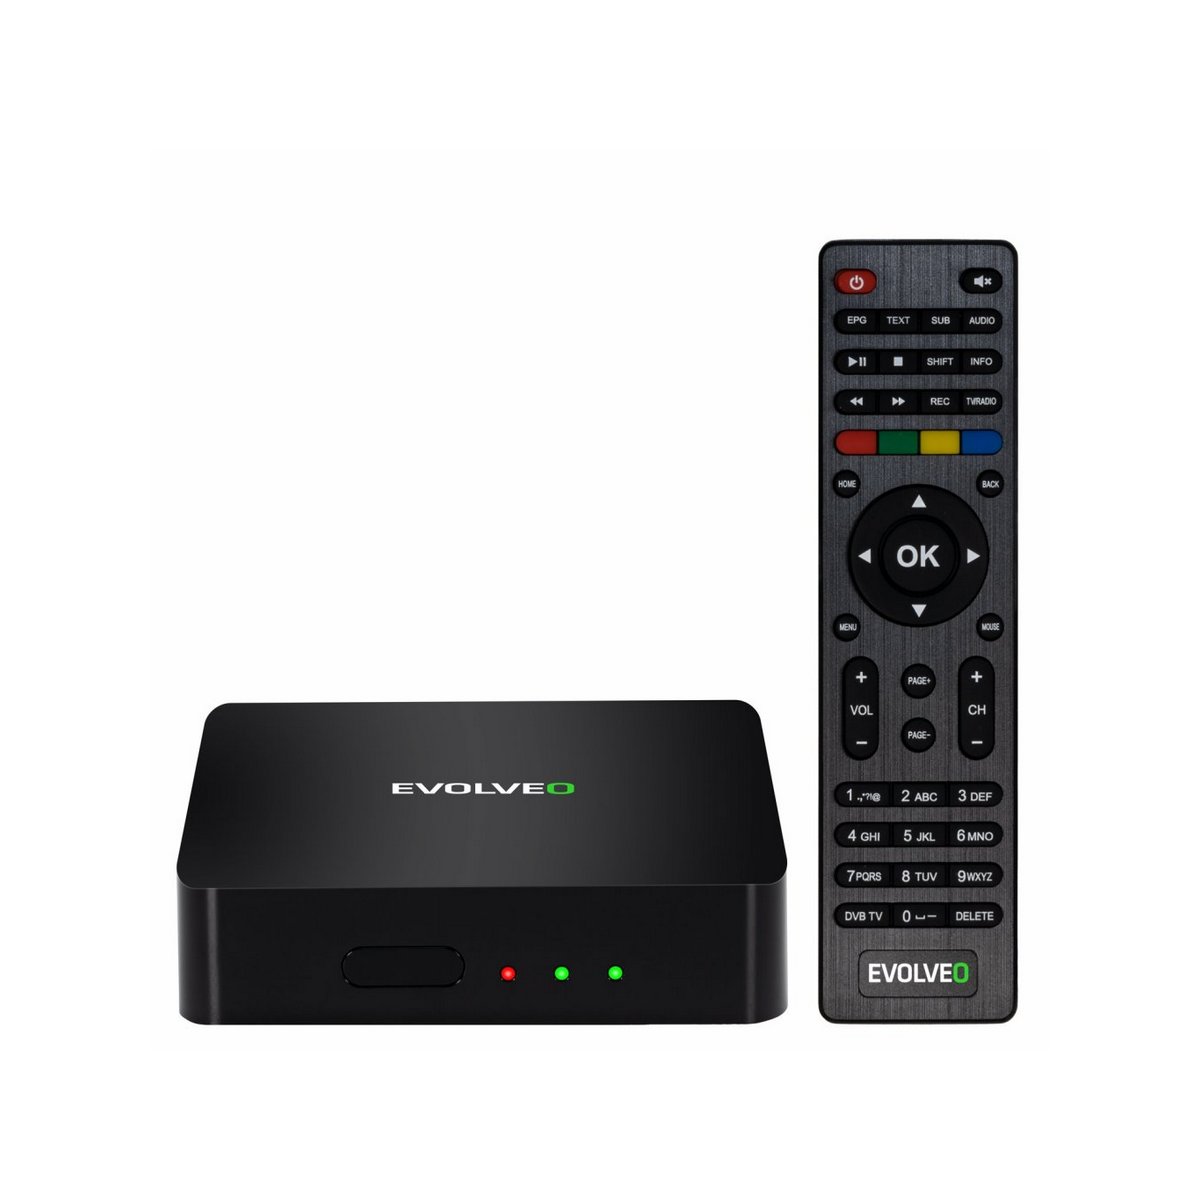 EVOLVEO HYBRID BOX T2, ANDROID AND DVB-T2 MULTIMEDIALNY CENTRUM,USB,HDMI,BT,WiFi